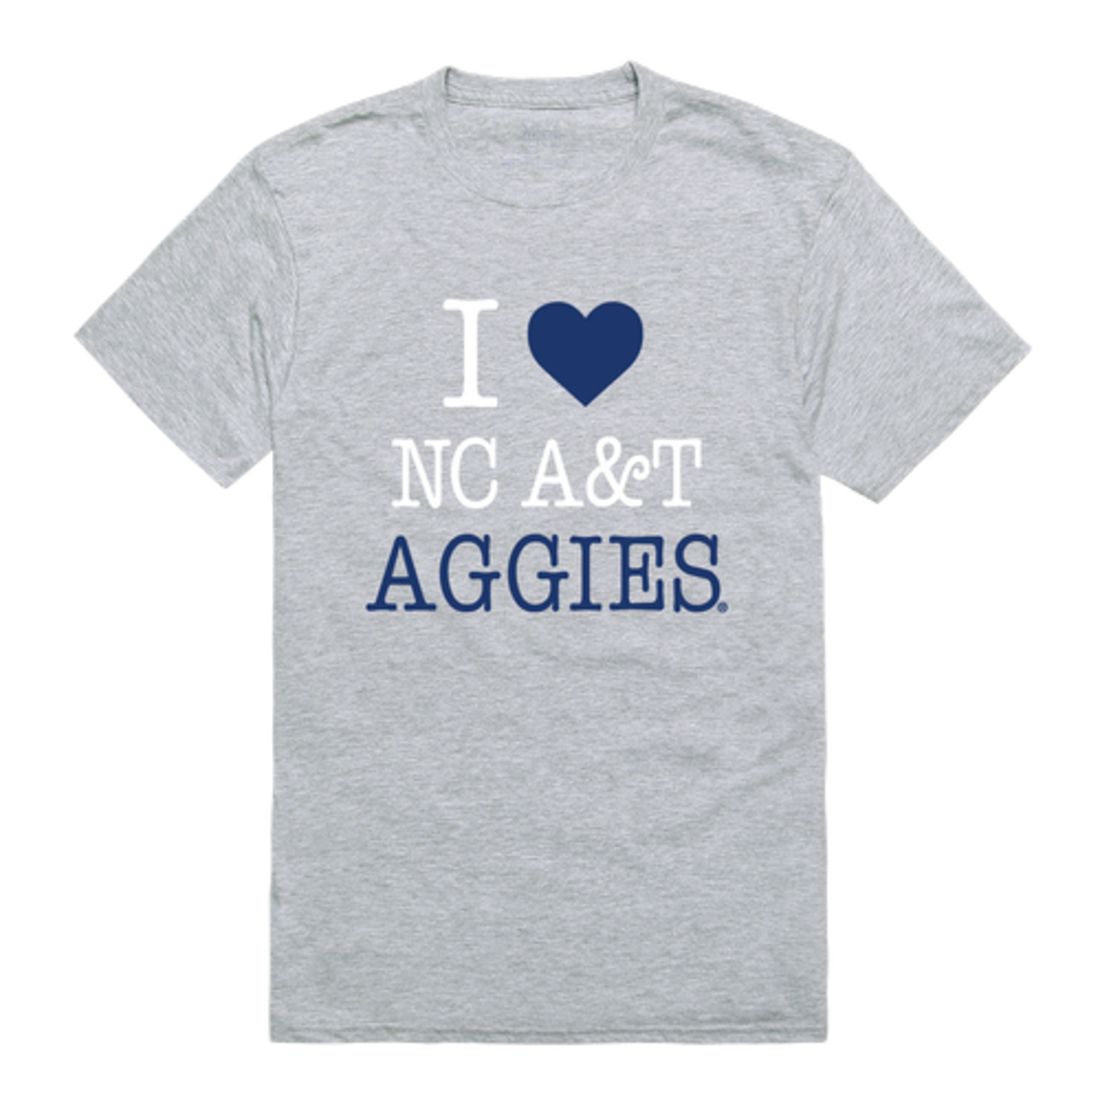 I Love North Carolina A&T State University Aggies T-Shirt Tee